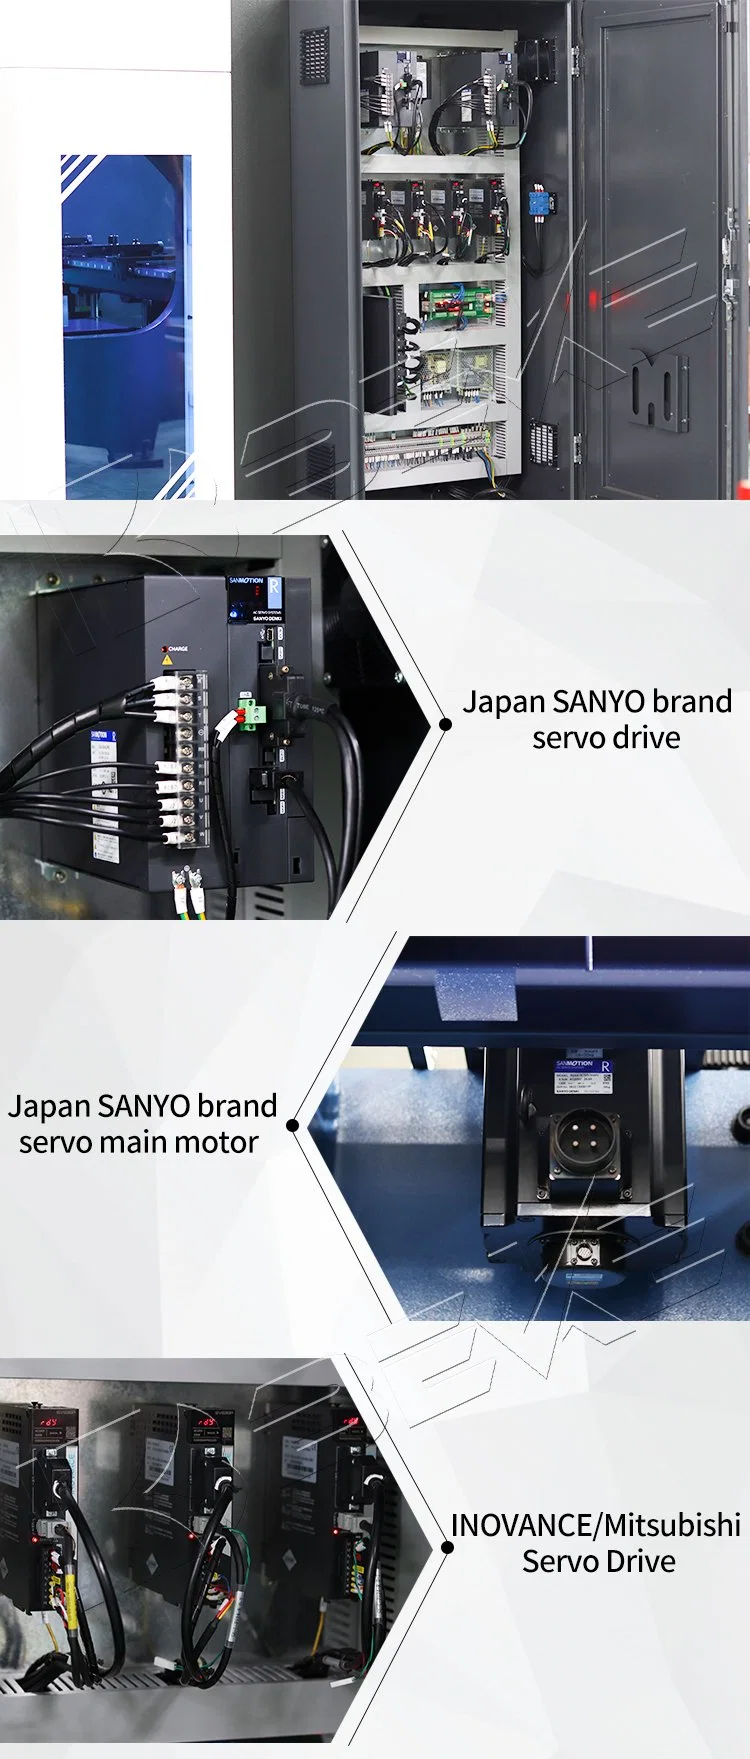 Electric Servo Motor Mini CNC Press Brake Small Bending Machine with Certificated